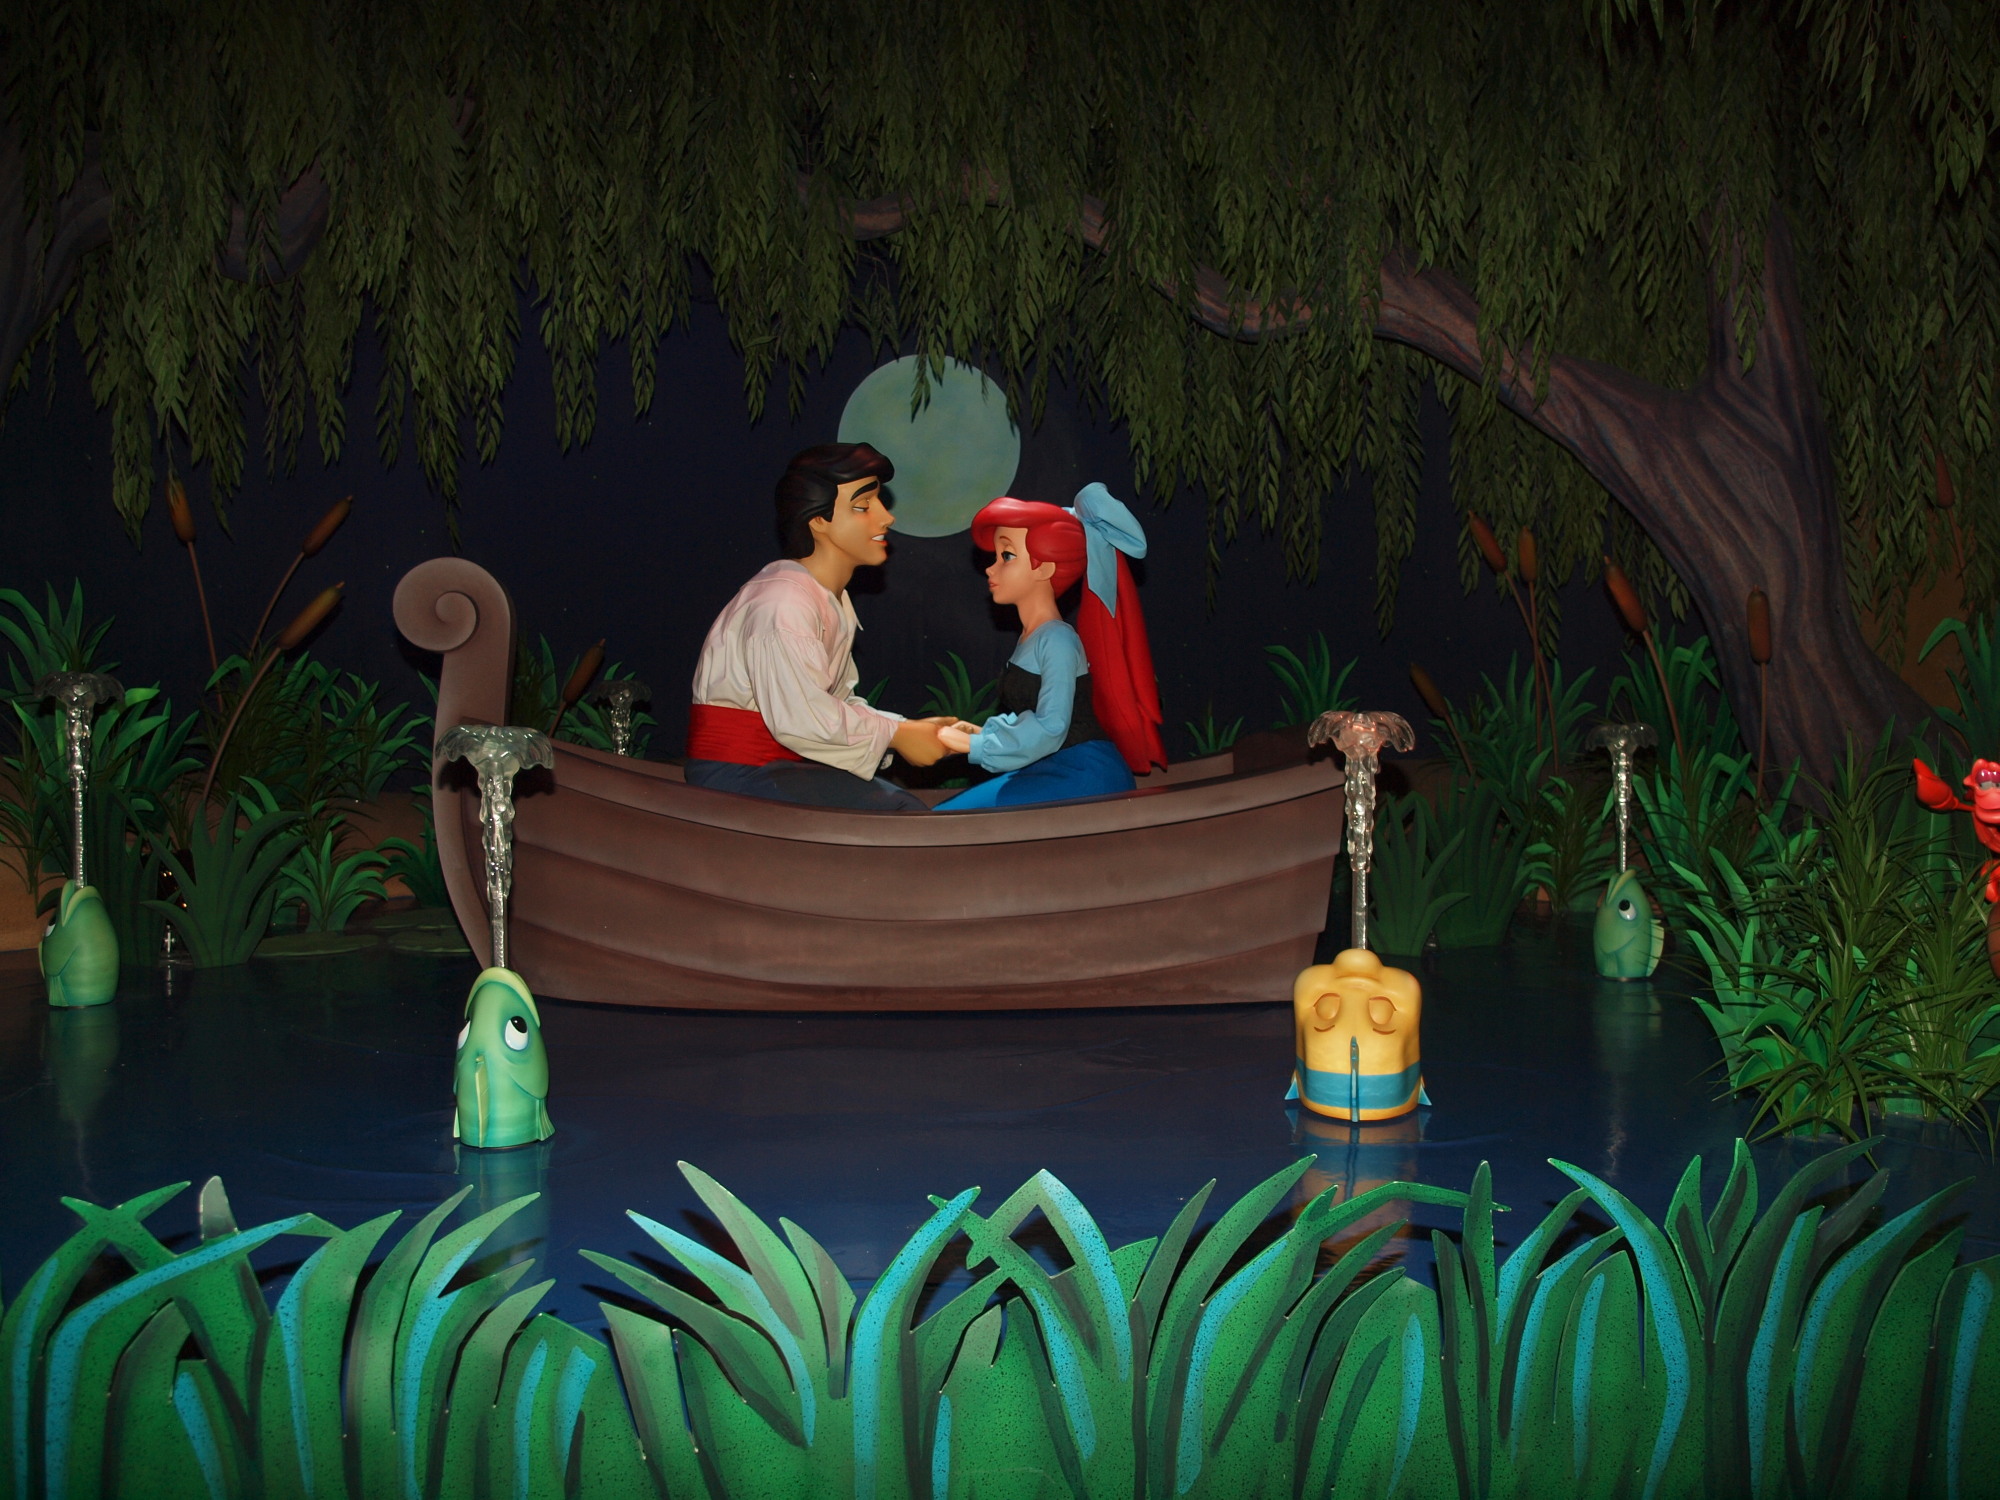 Magic Kingdom - Fantasyland - Under the Sea Journey of the Little Mermaid